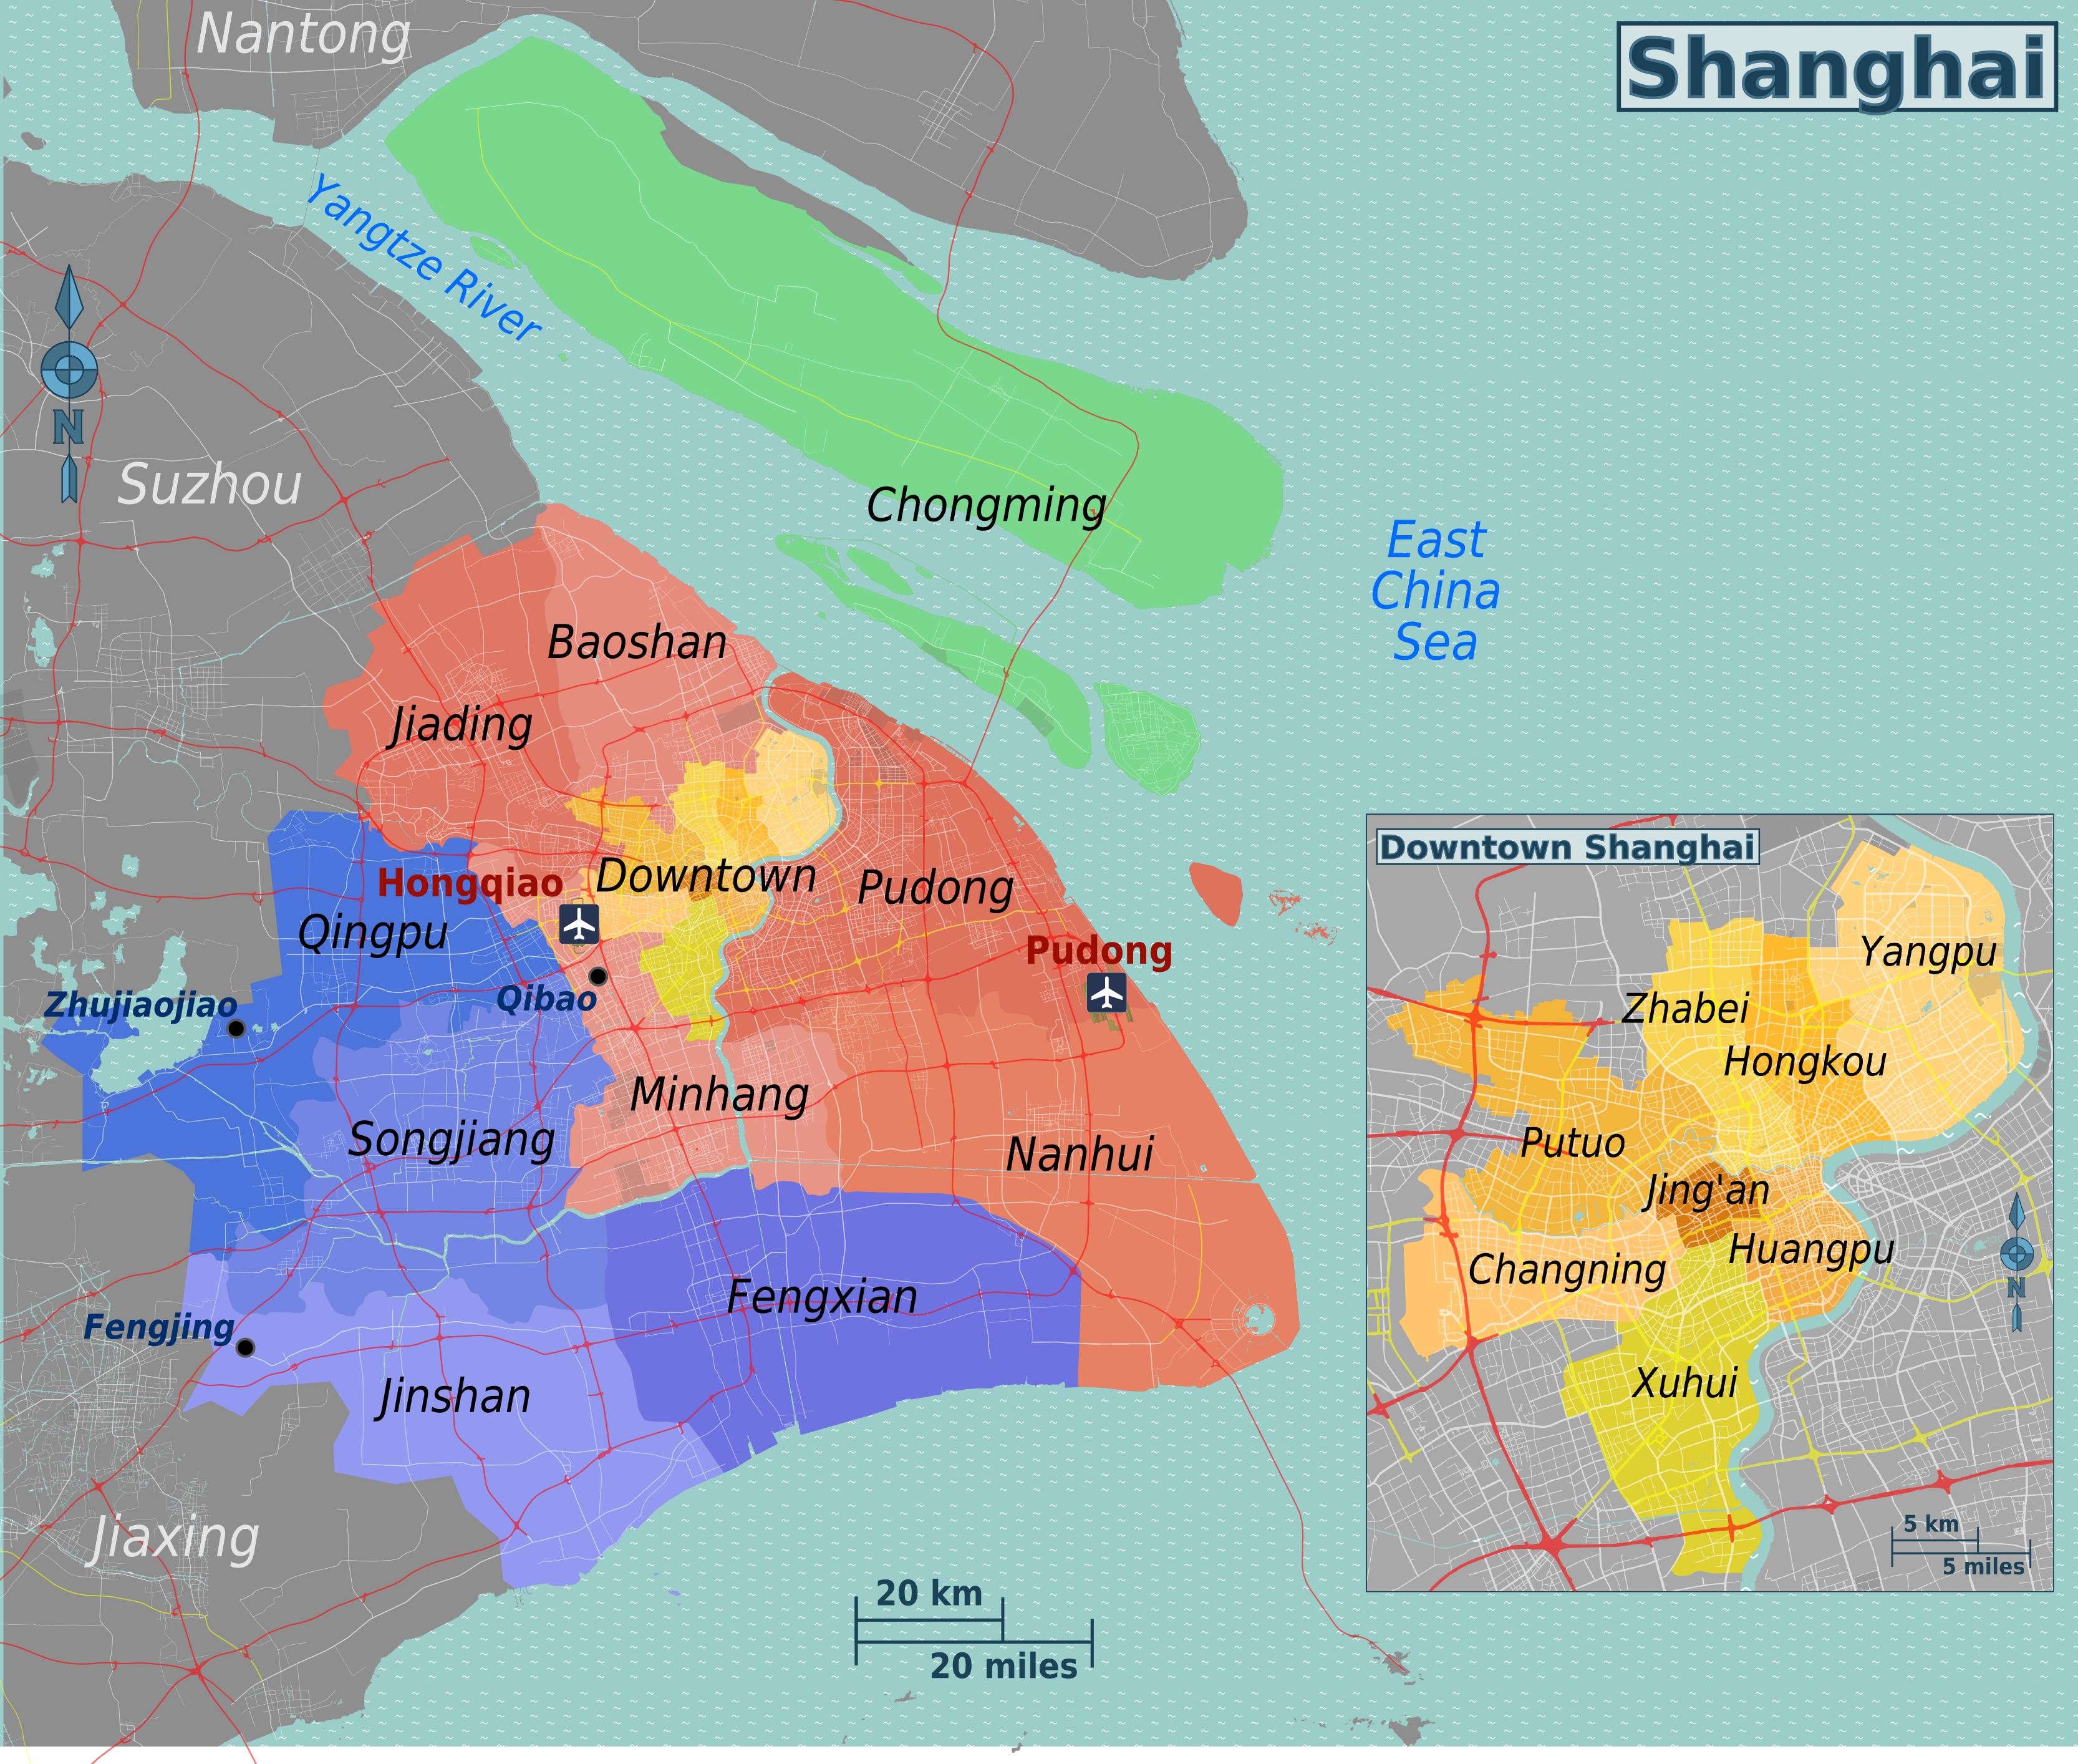 Map of Shanghai neighborhood: surrounding area and suburbs of Shanghai